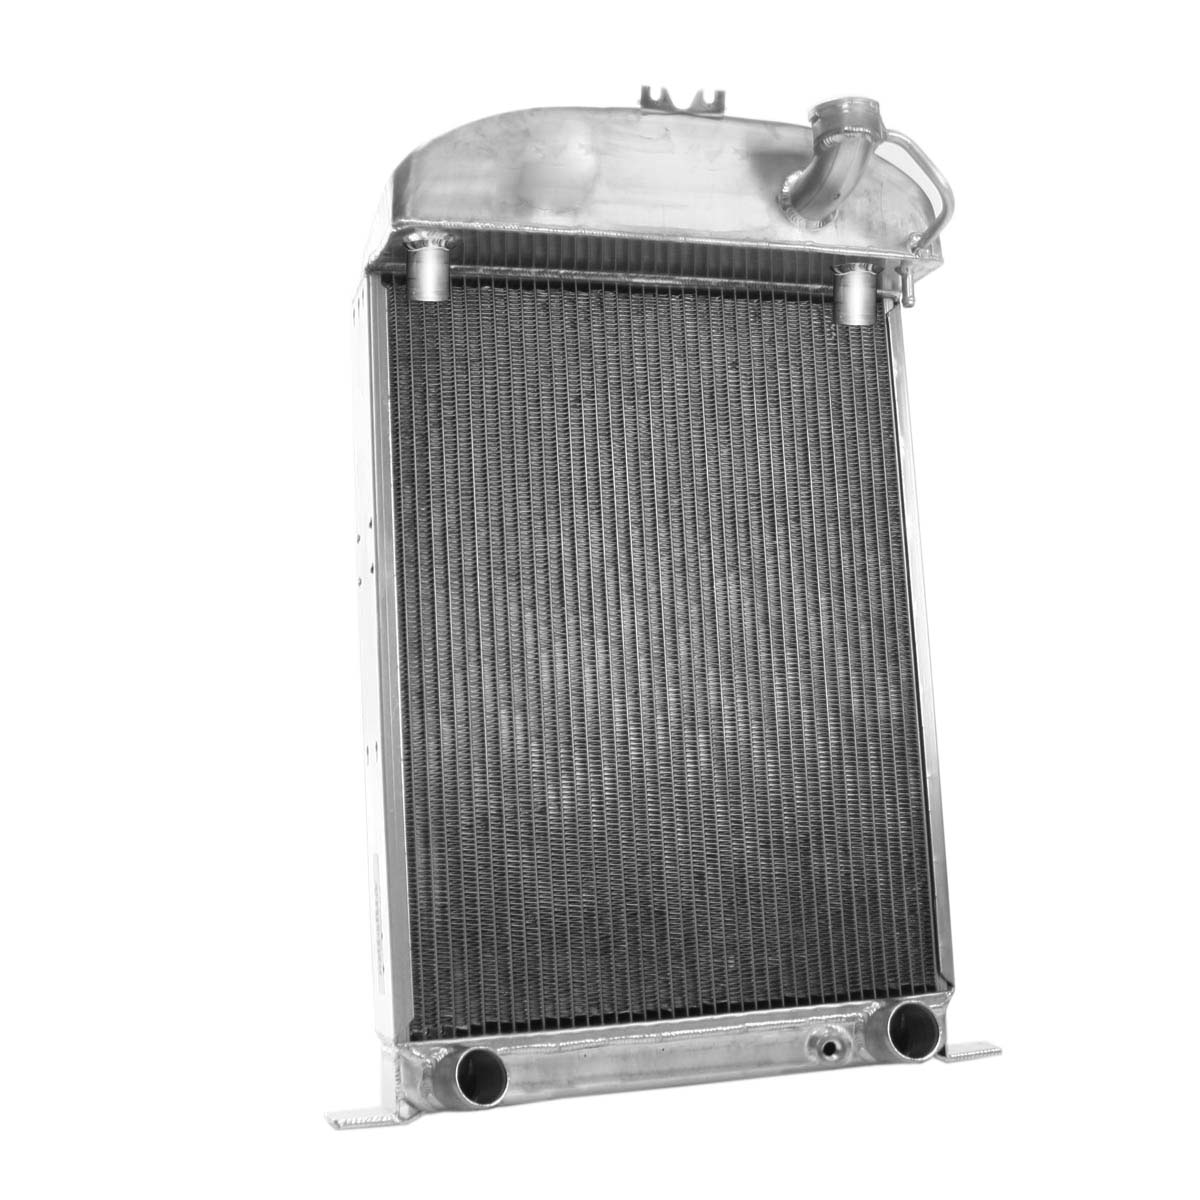 1933 Ford  Griffin Aluminum Radiator - Part Number 7-00094